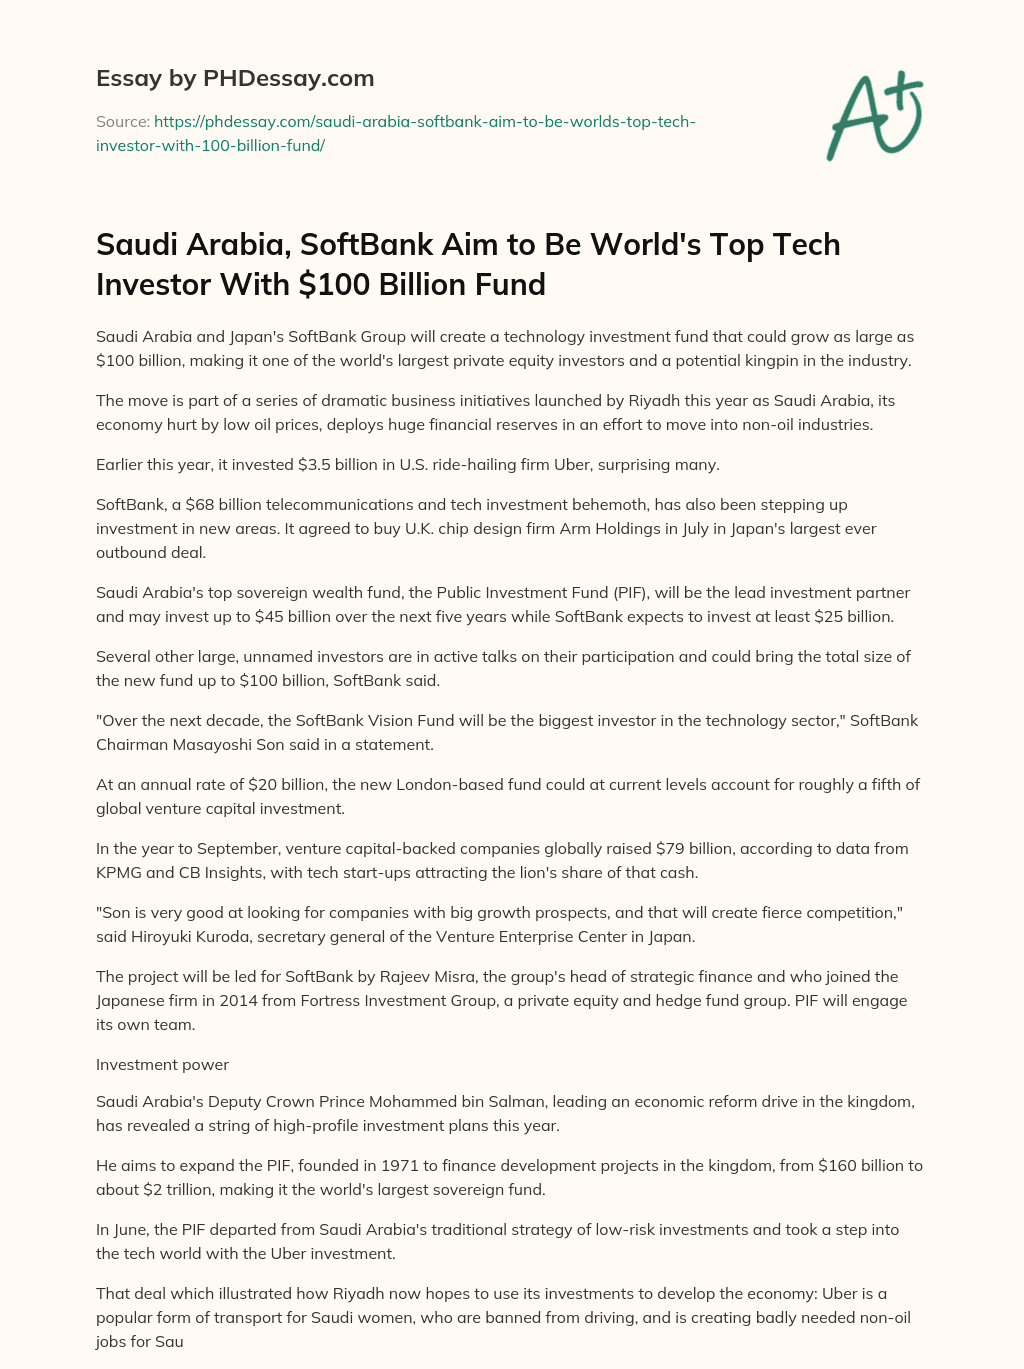 Saudi Arabia, SoftBank Aim to Be World’s Top Tech Investor With $100 Billion Fund essay